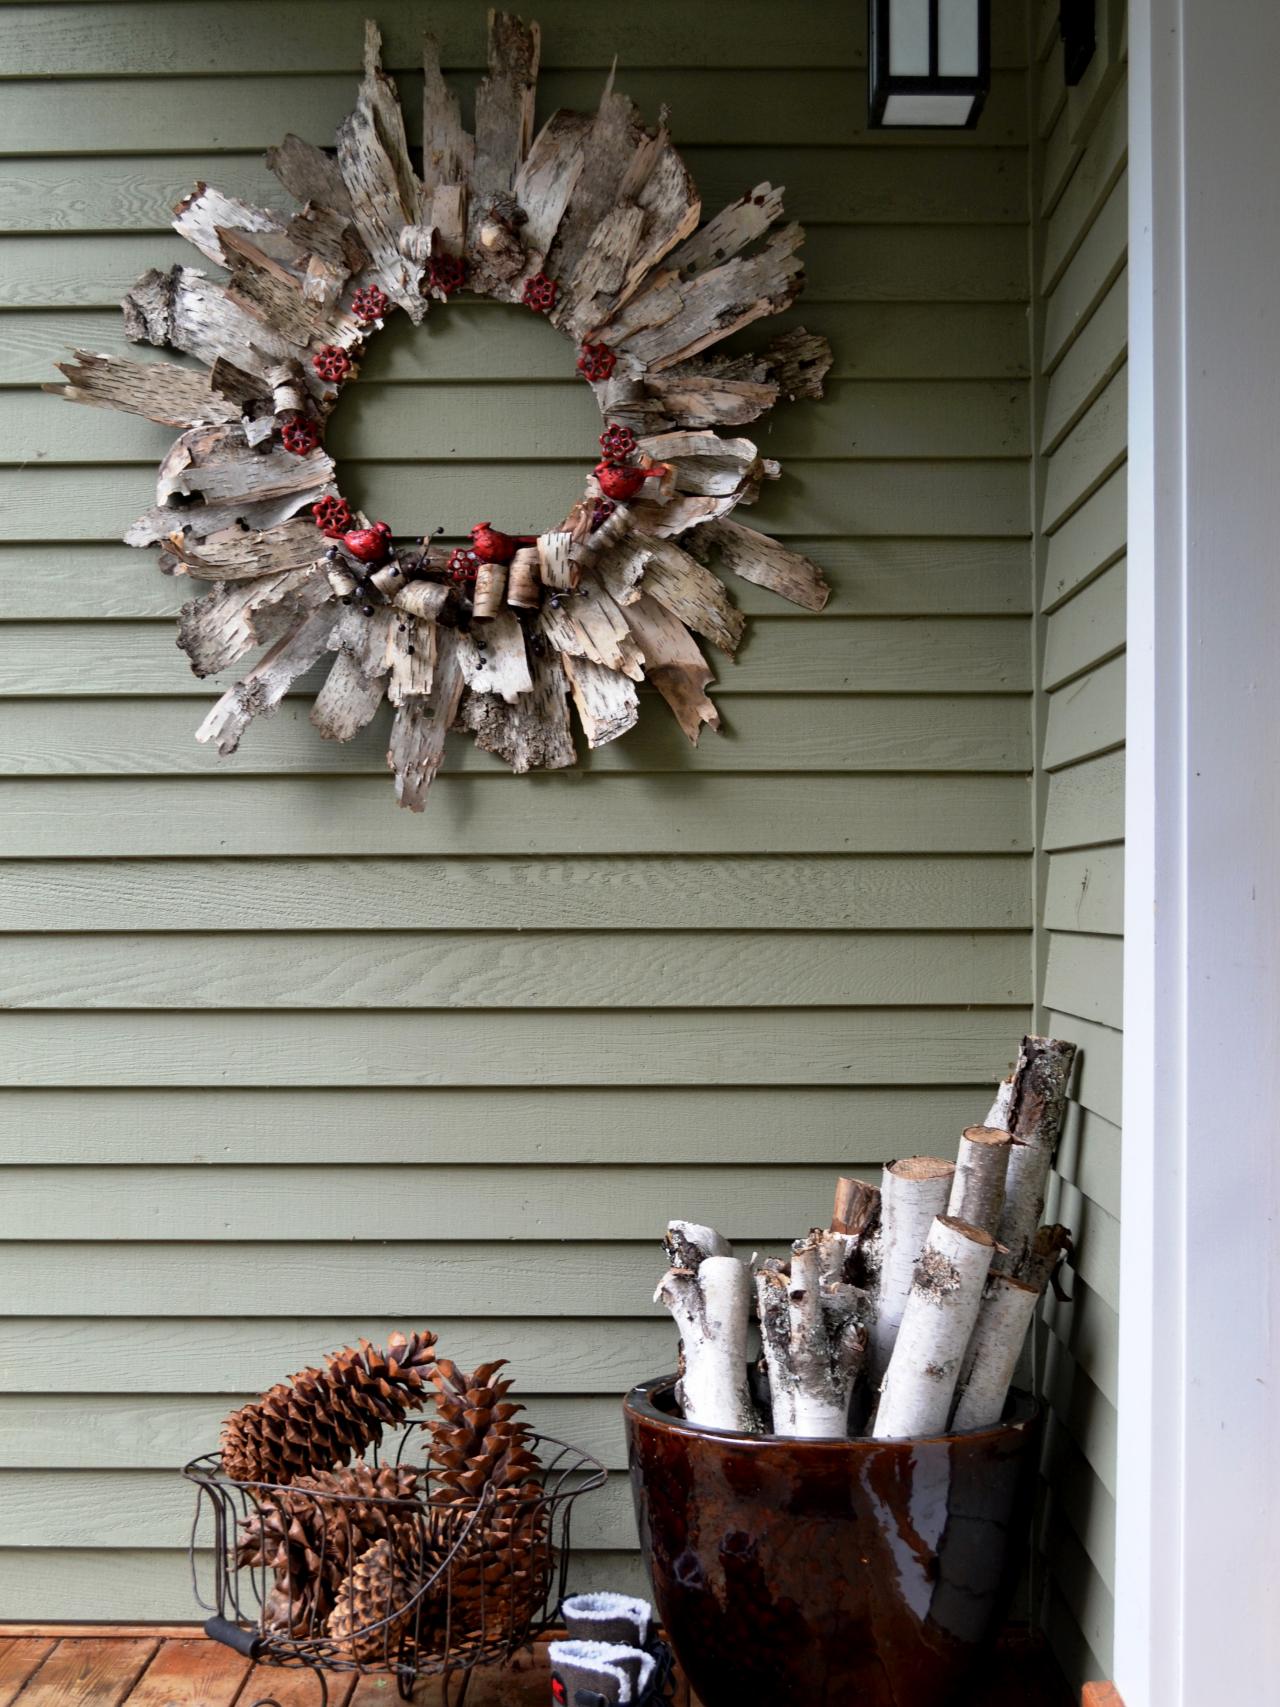 Repurposed Wood Shavings Wreaths as a Christmas Decorating Idea